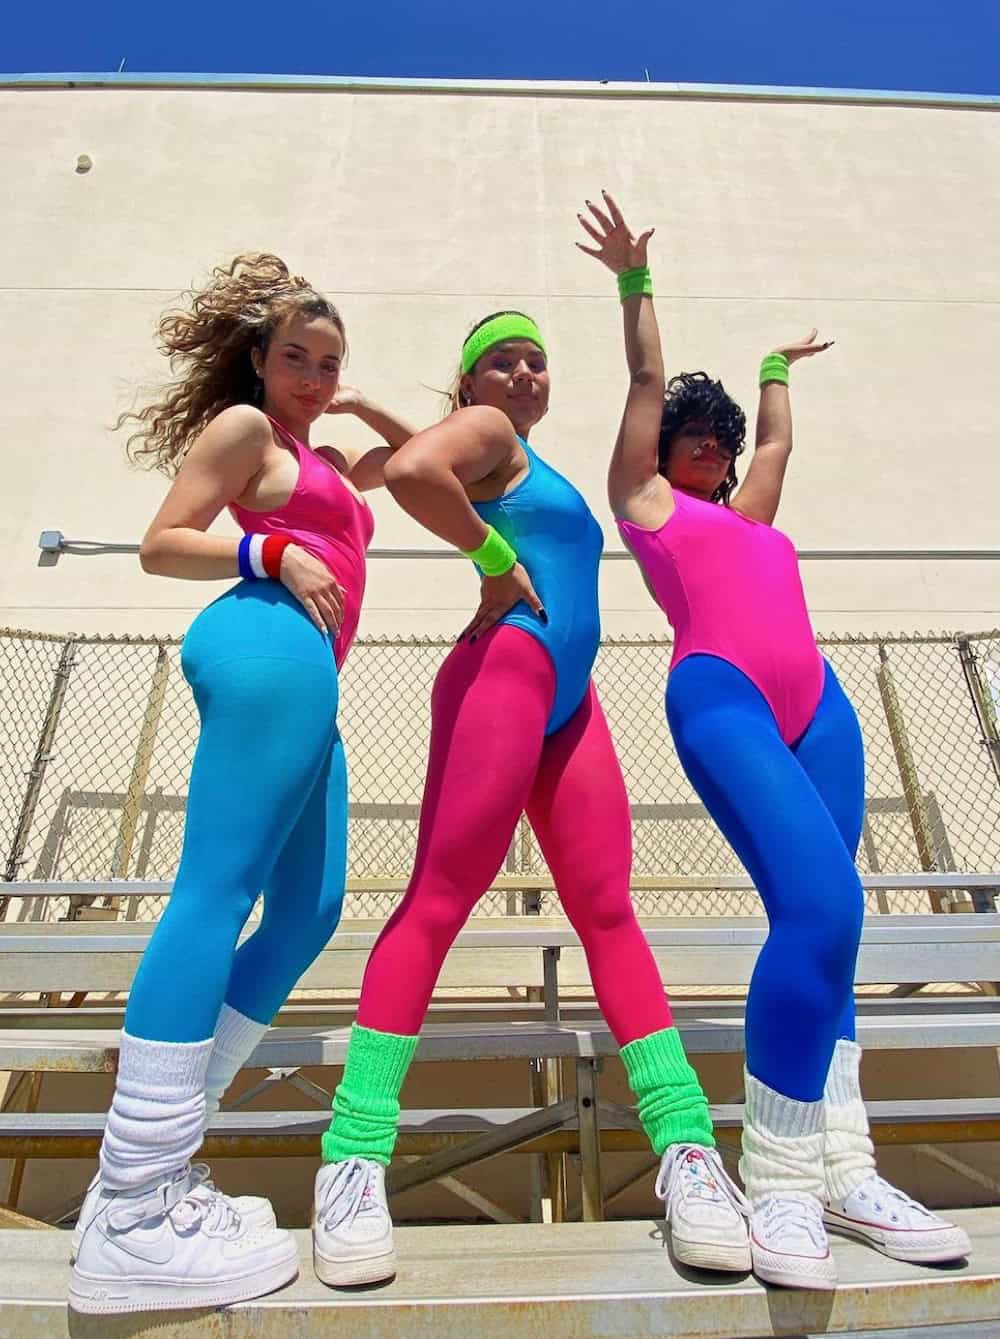 Three women dressed as 80s aerobics girls for Halloween.